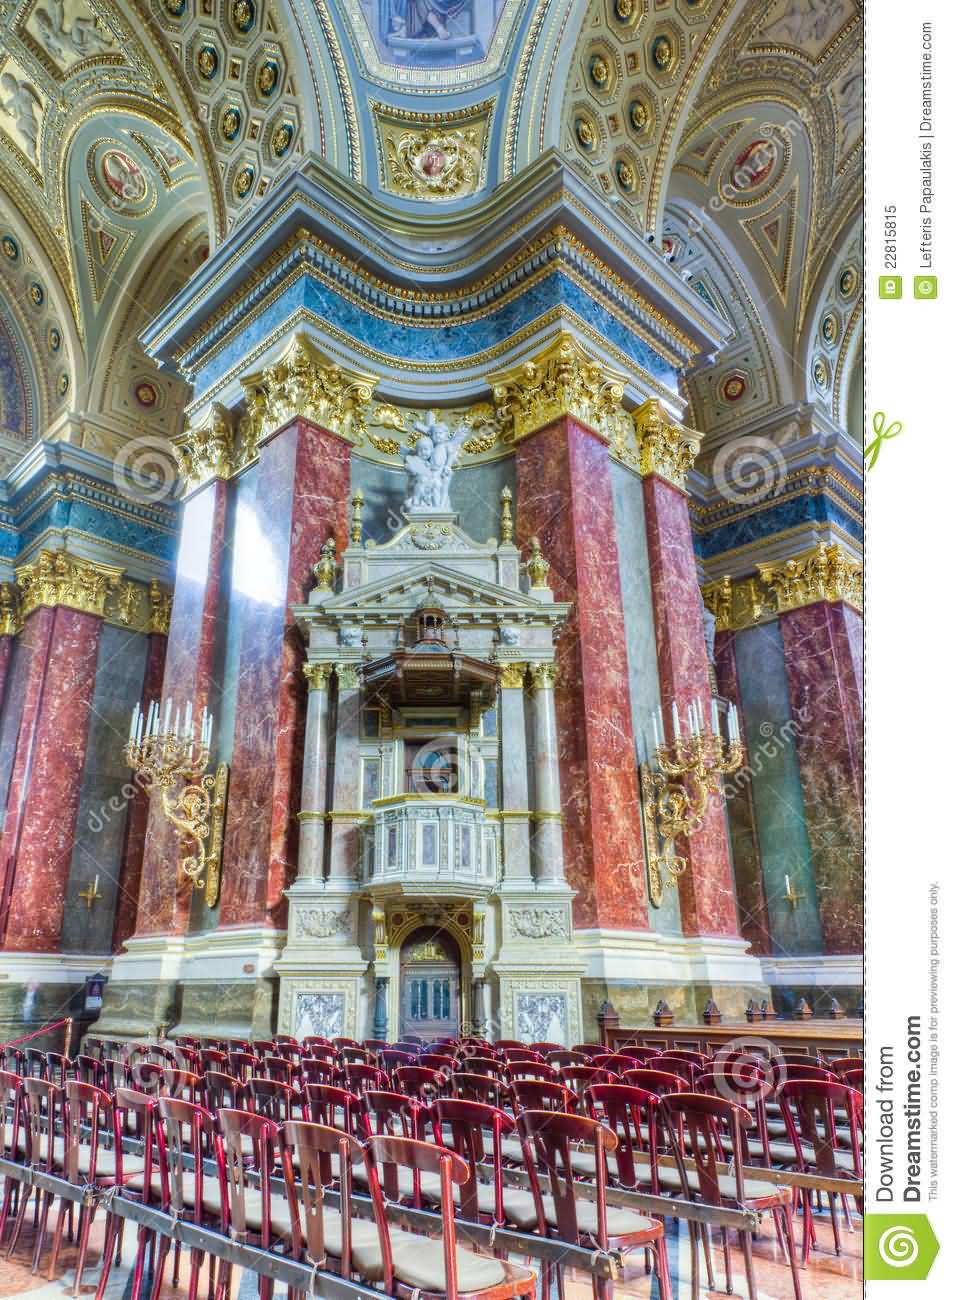 St. Stephen’s Basilica Interior, Budapest